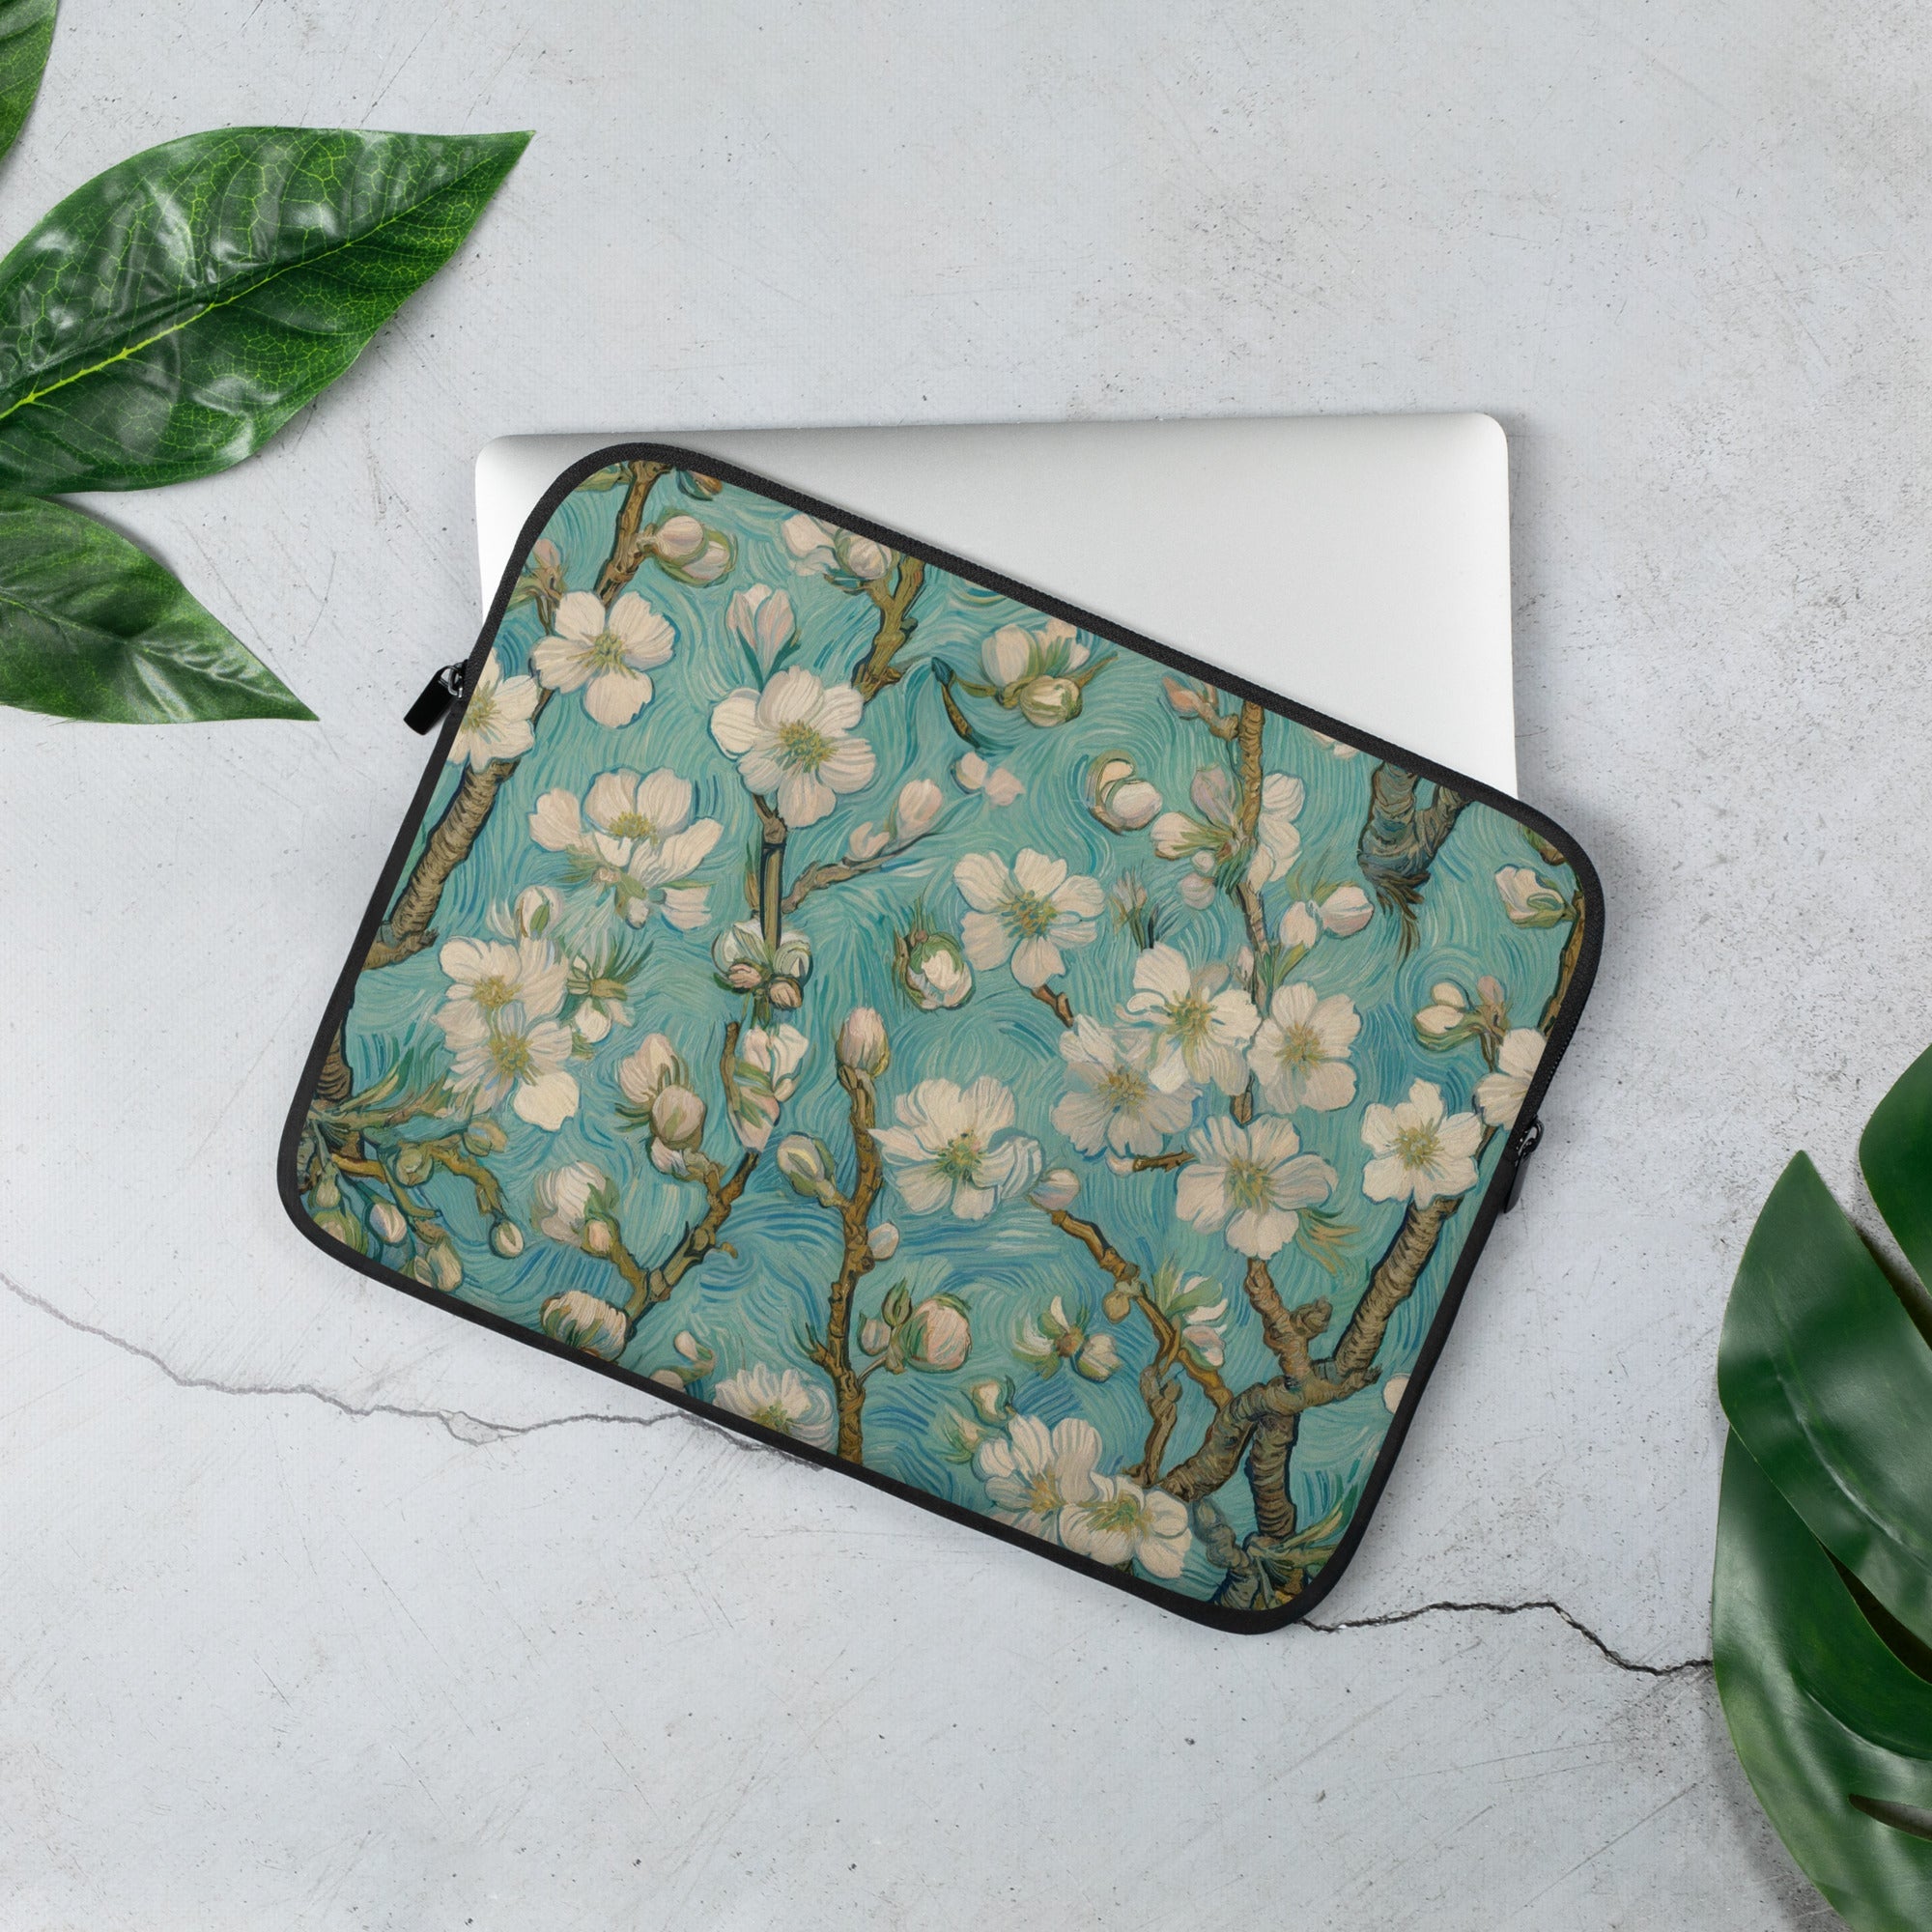 Vincent van Gogh 'Almond Blossom' Famous Painting Laptop Sleeve | Premium Art Laptop Sleeve 13"/15"